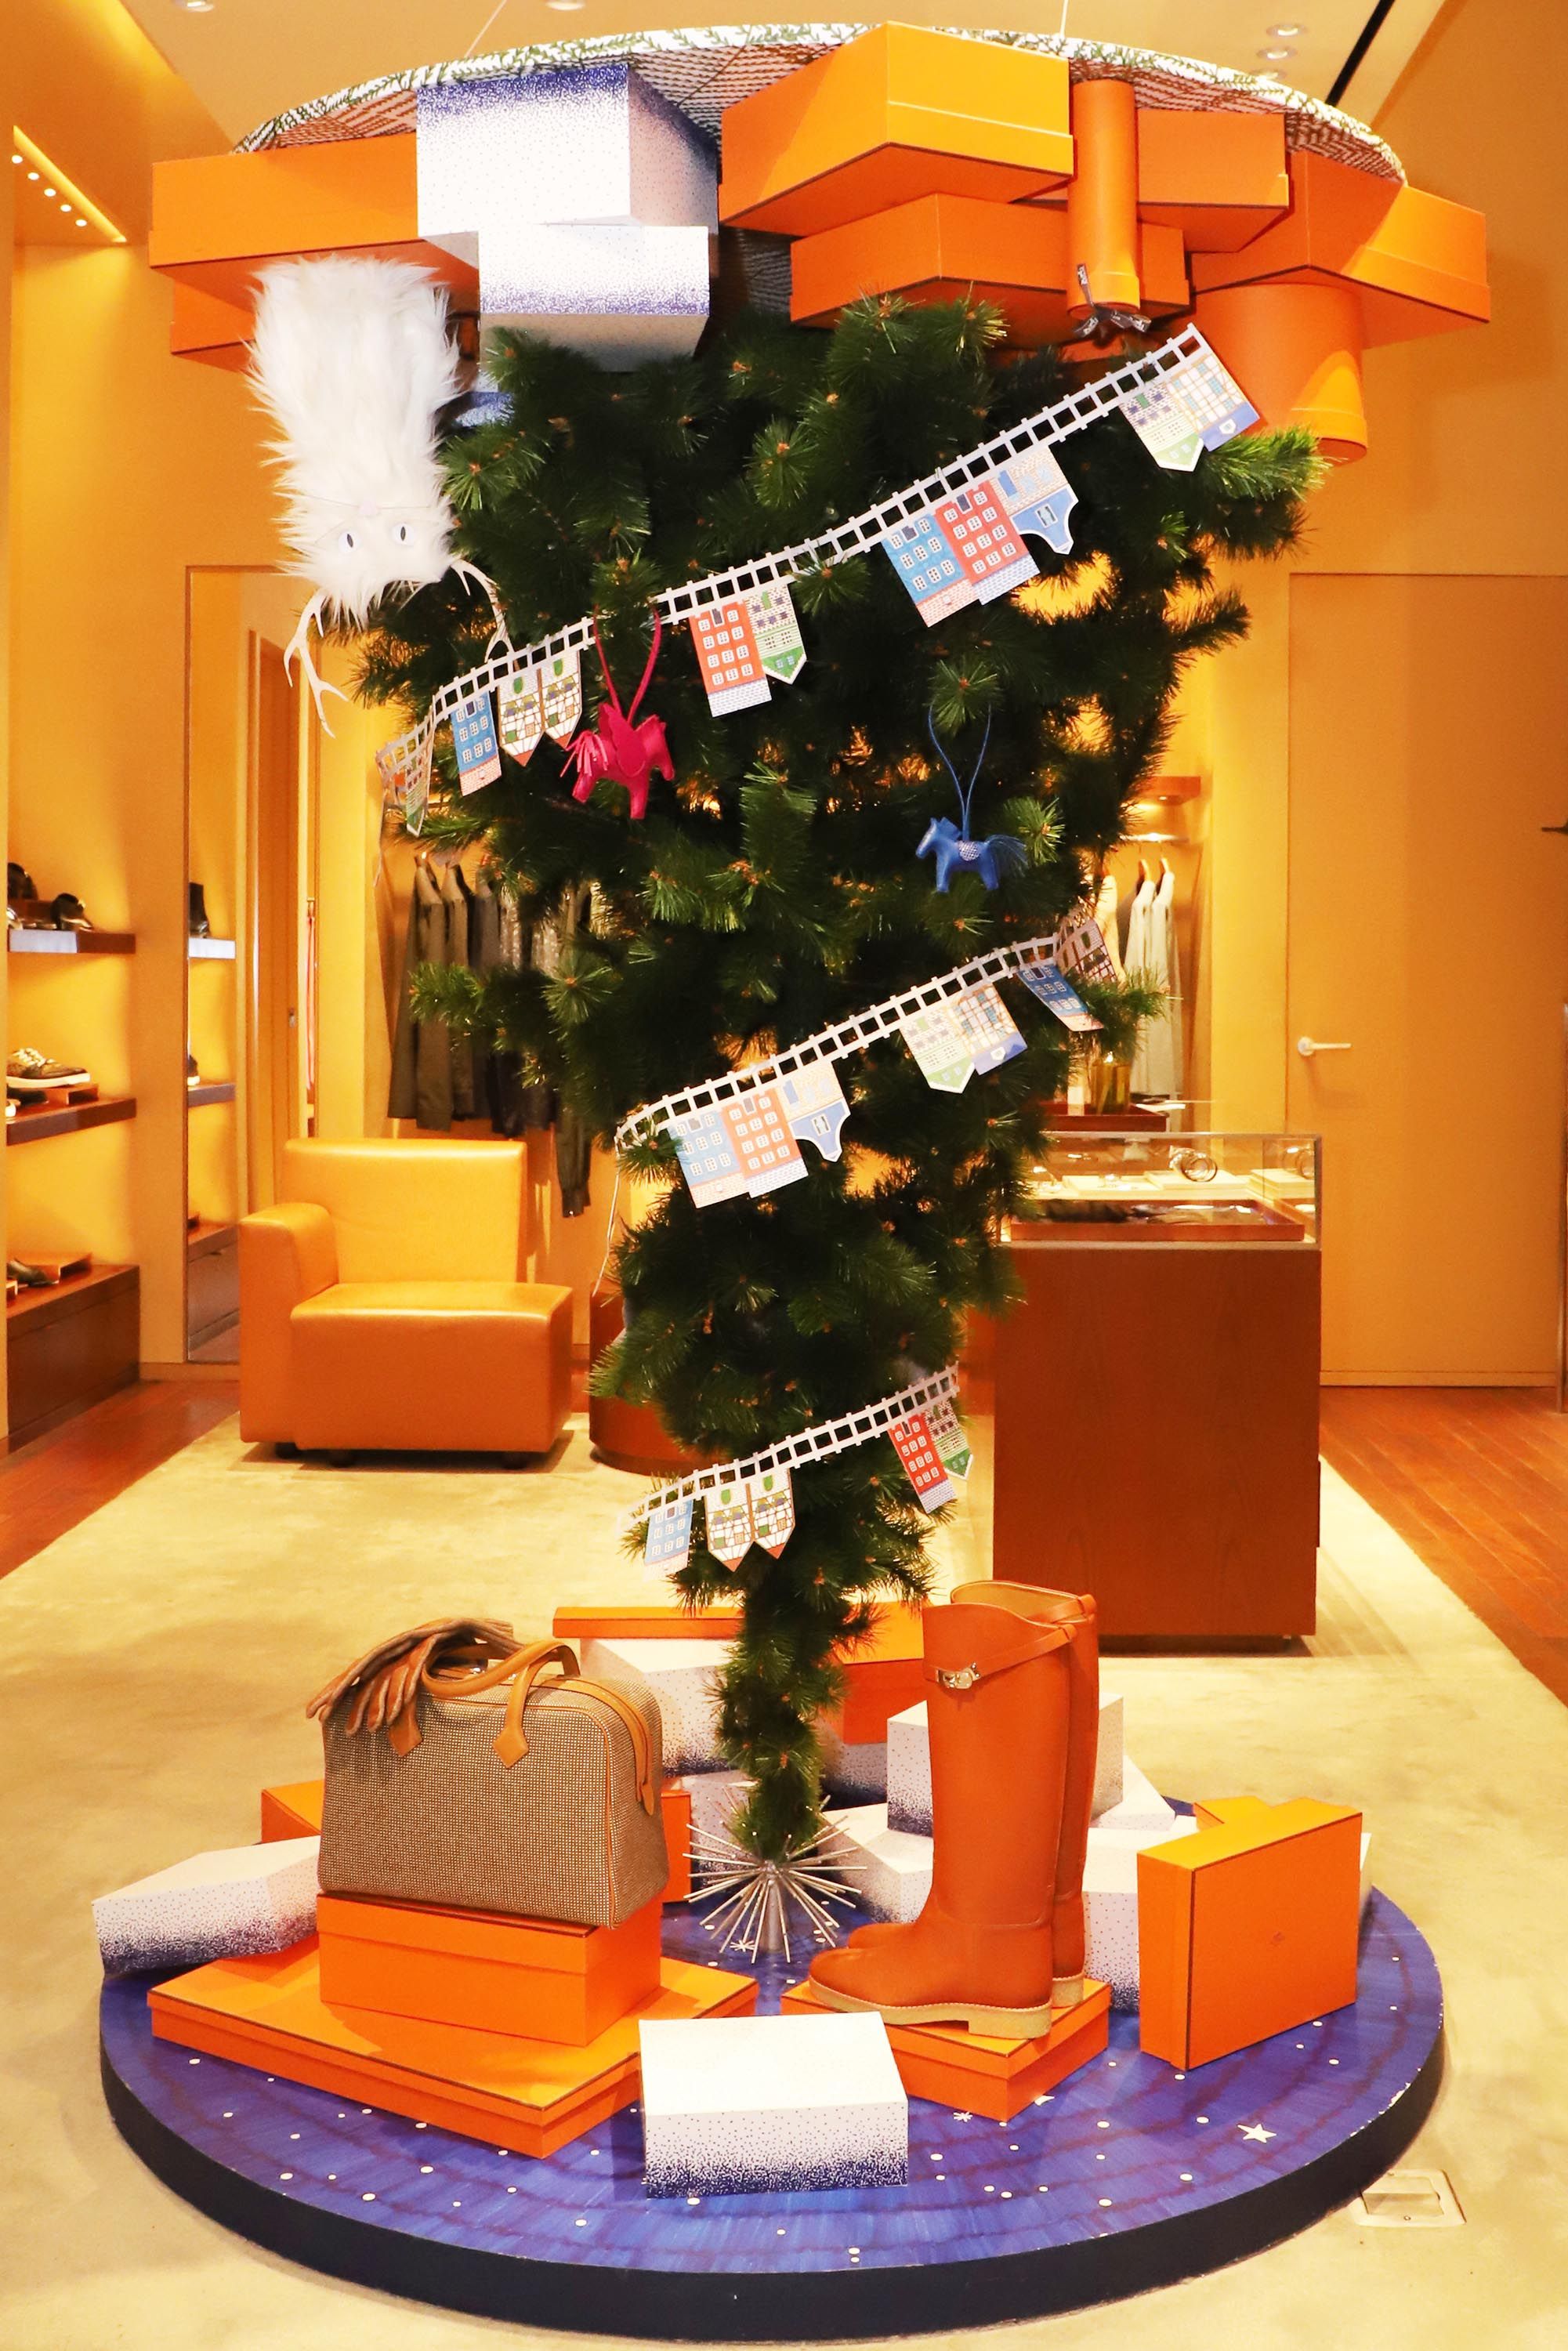 Butik Hermès Rayakan Holiday dengan Tema Upside Down